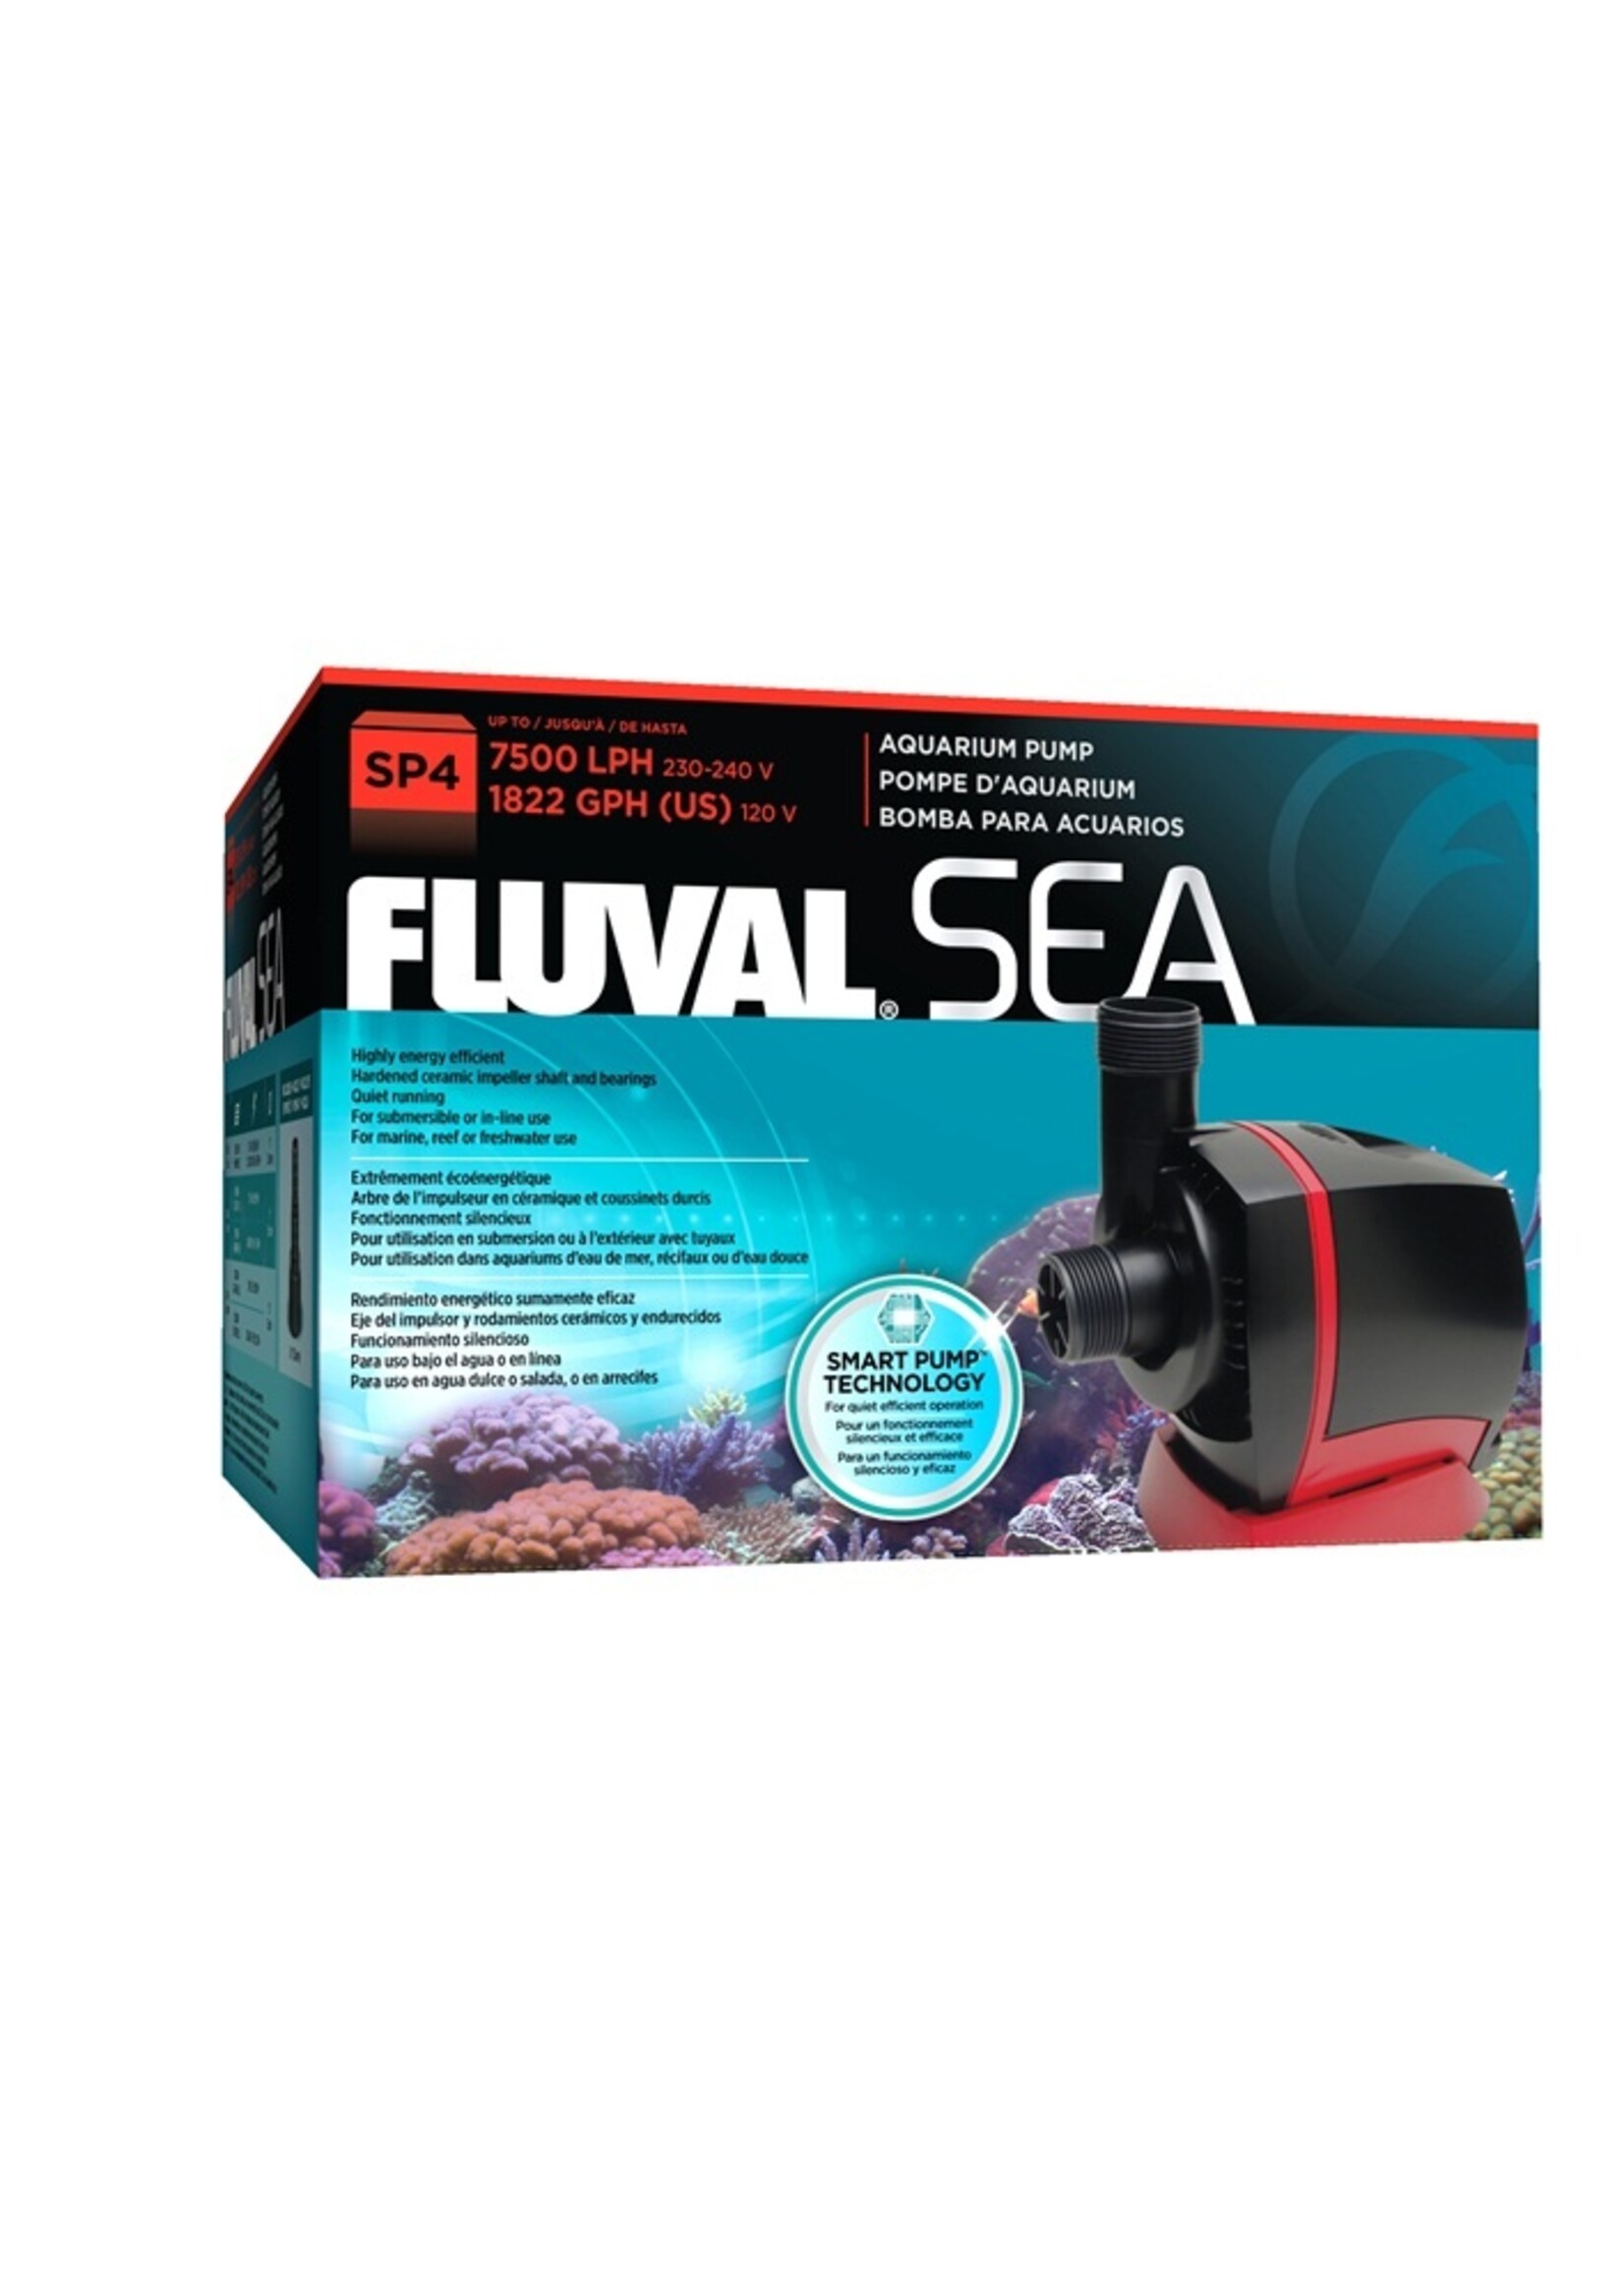 Fluval Sea Fluval Sea SP4 Sump Pump 7500LPH